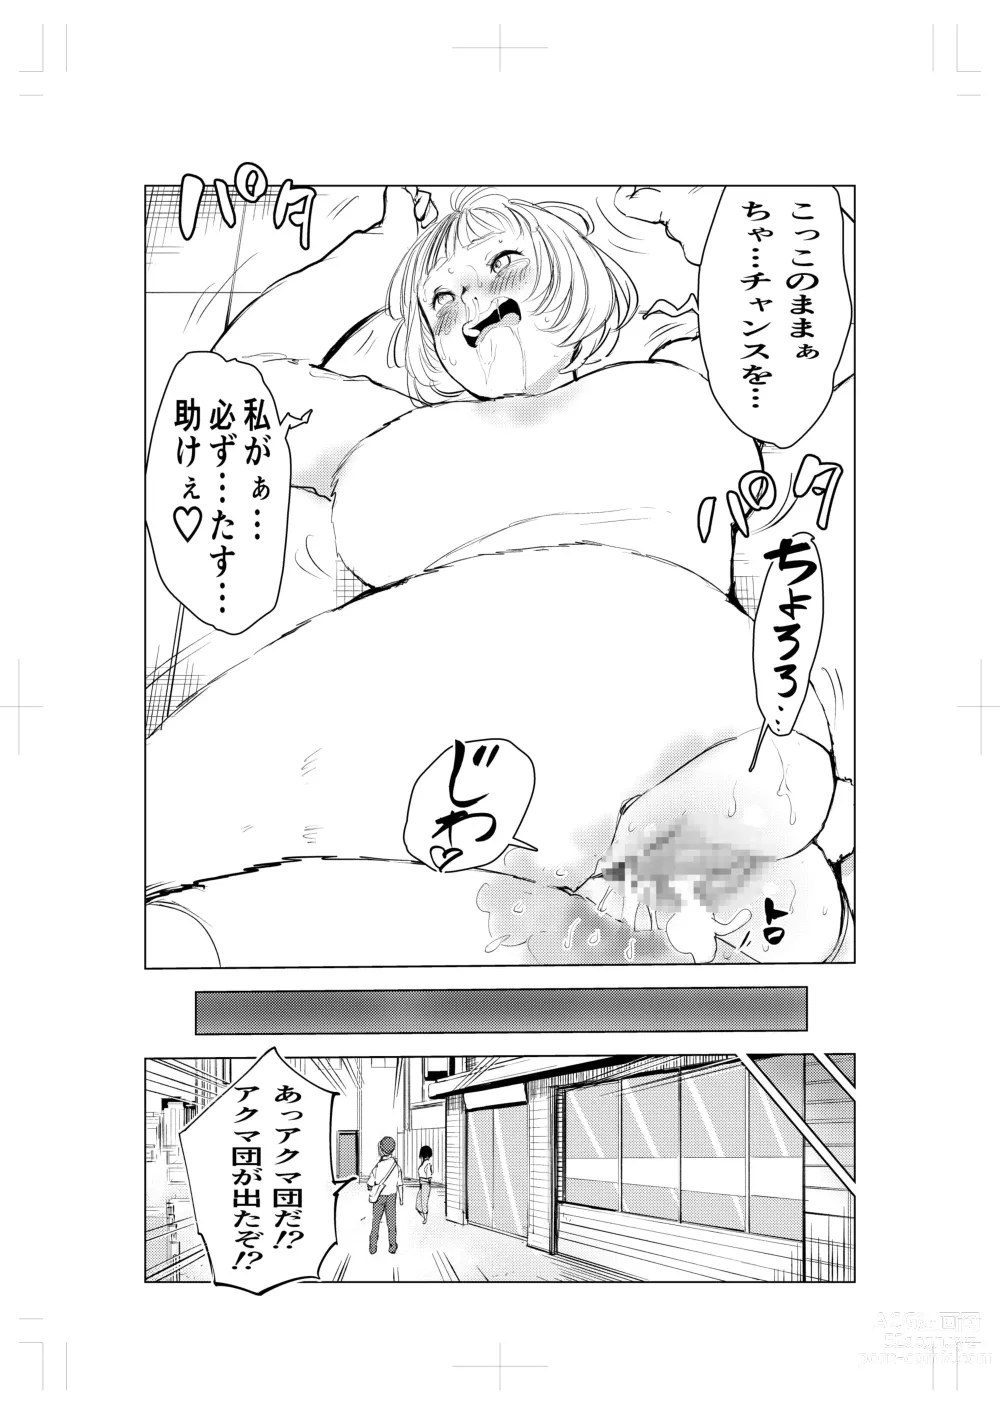 Page 34 of doujinshi Kigurumi niku manjū